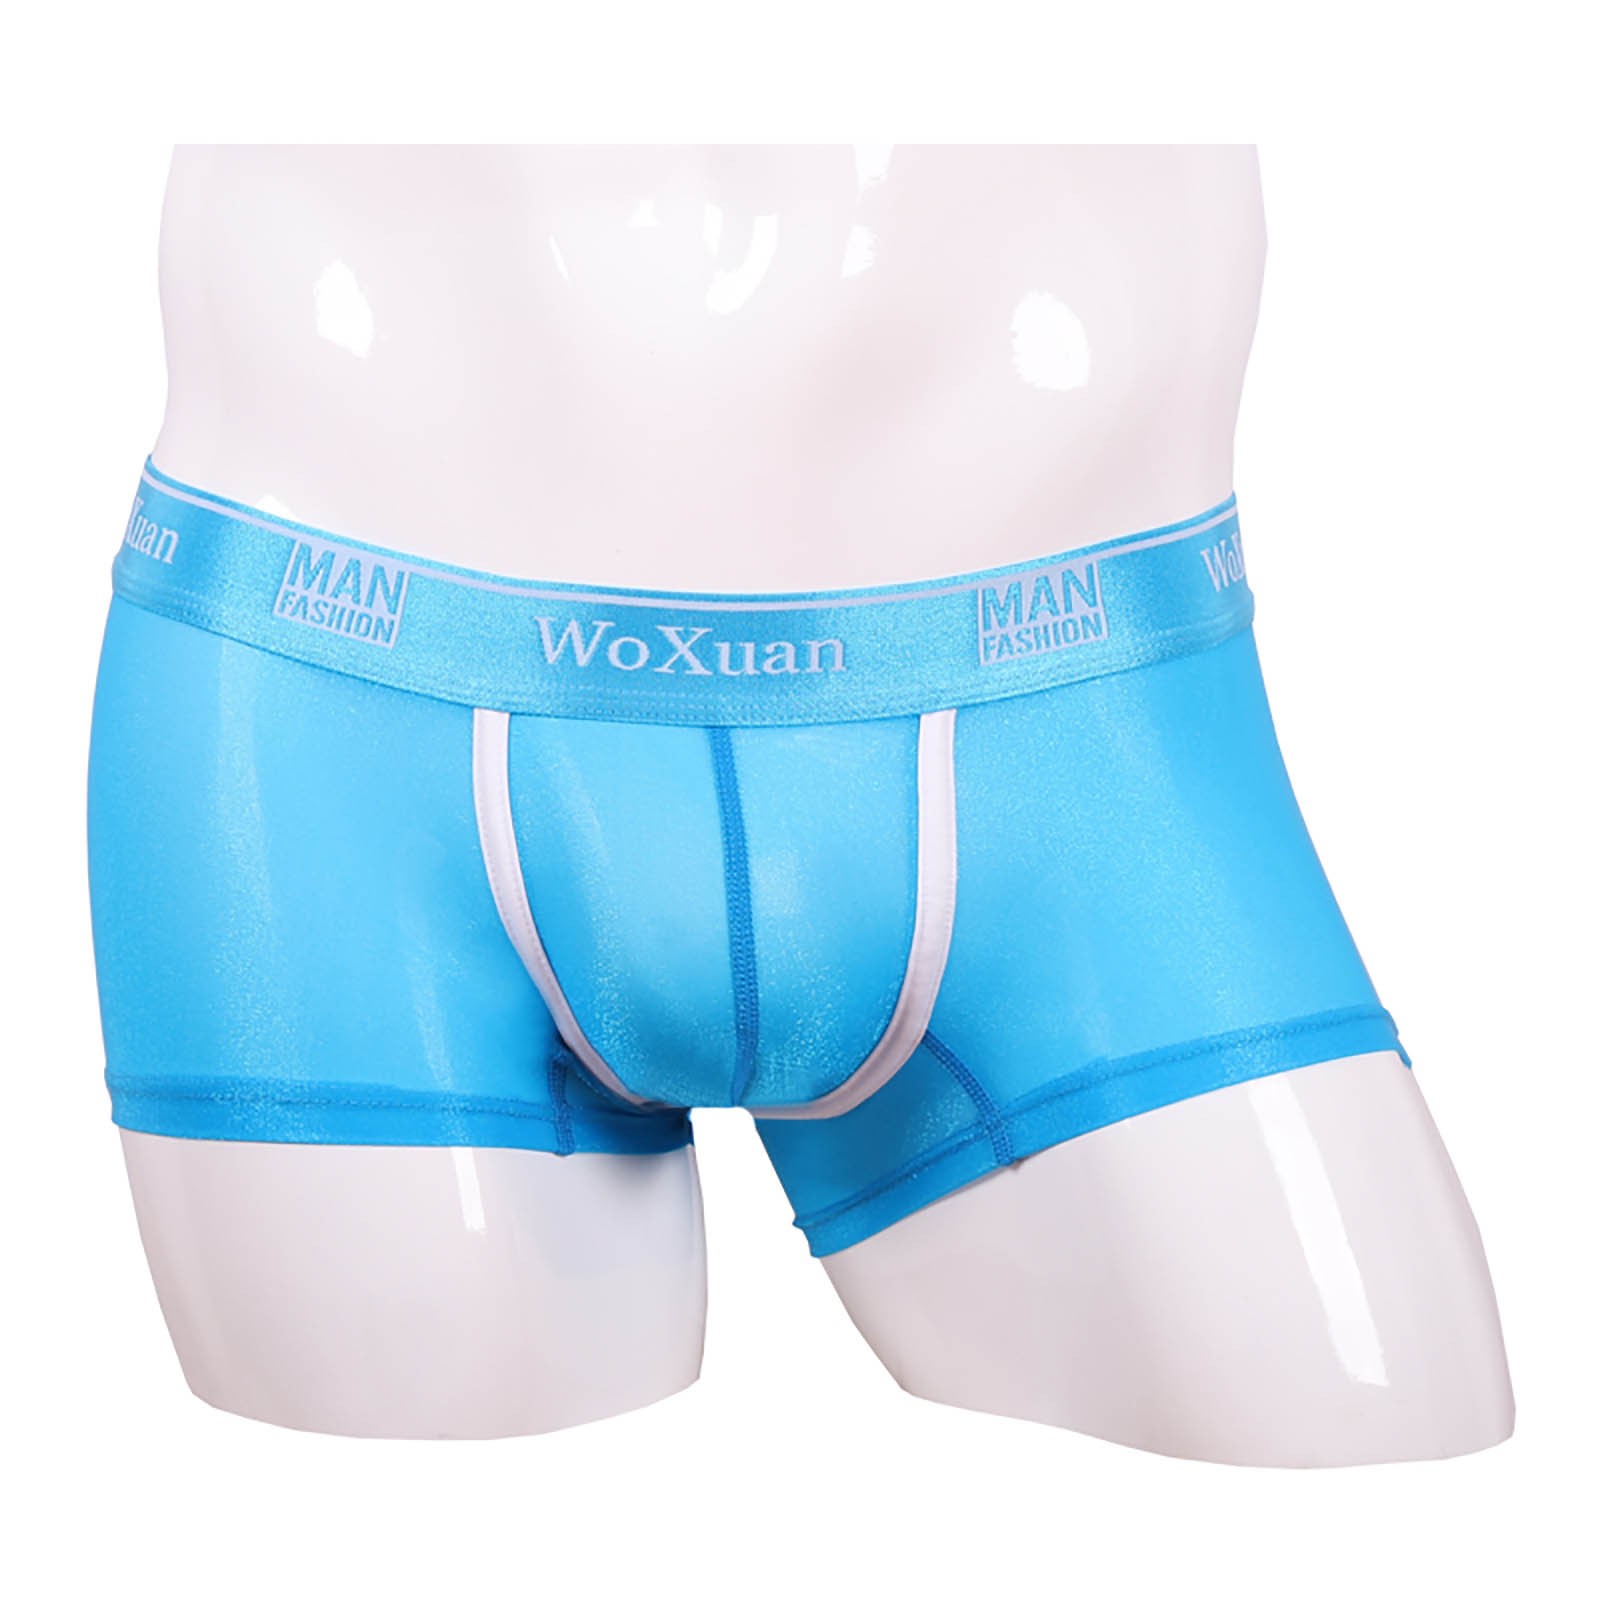 Men's Underwear for sale in Nyssa, Oregon, Facebook Marketplace